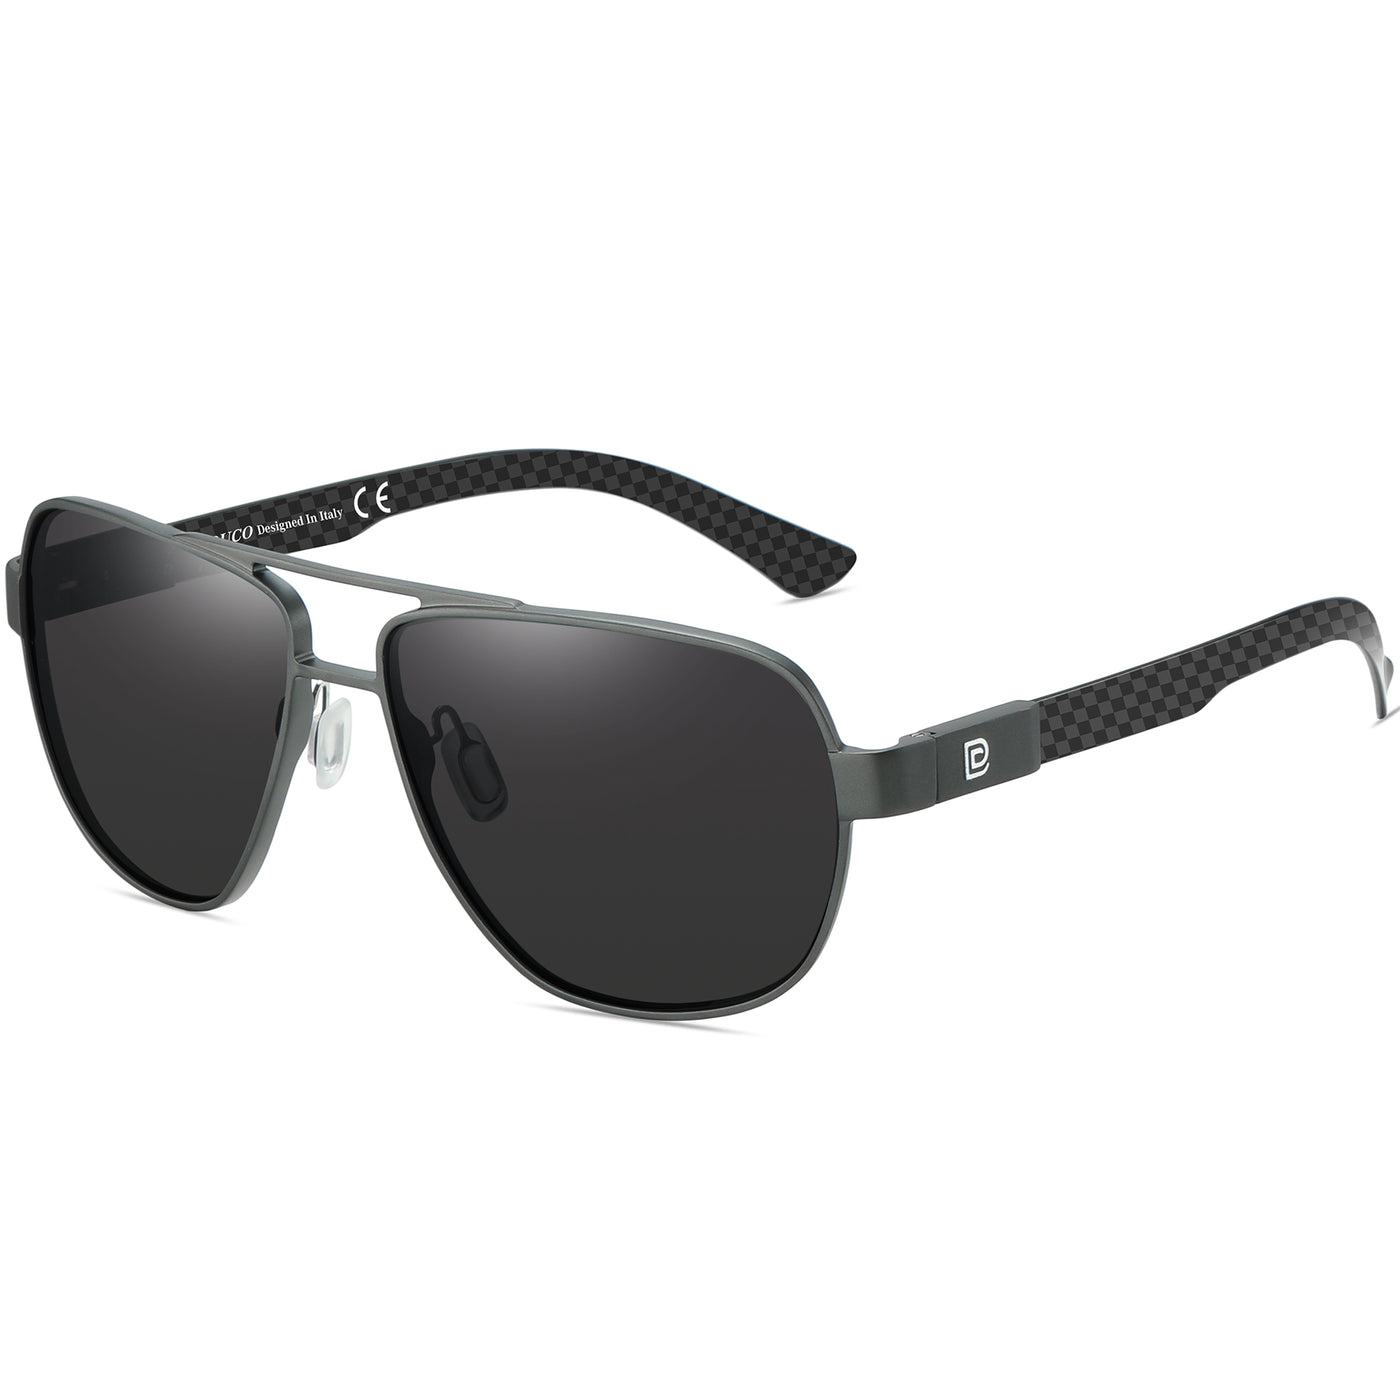 DUCO Aviator Sunglasses For Men Polarized Sunglasses Men UV Protection Carbon Fiber Temple Mens Sun glasses For Driving 3051